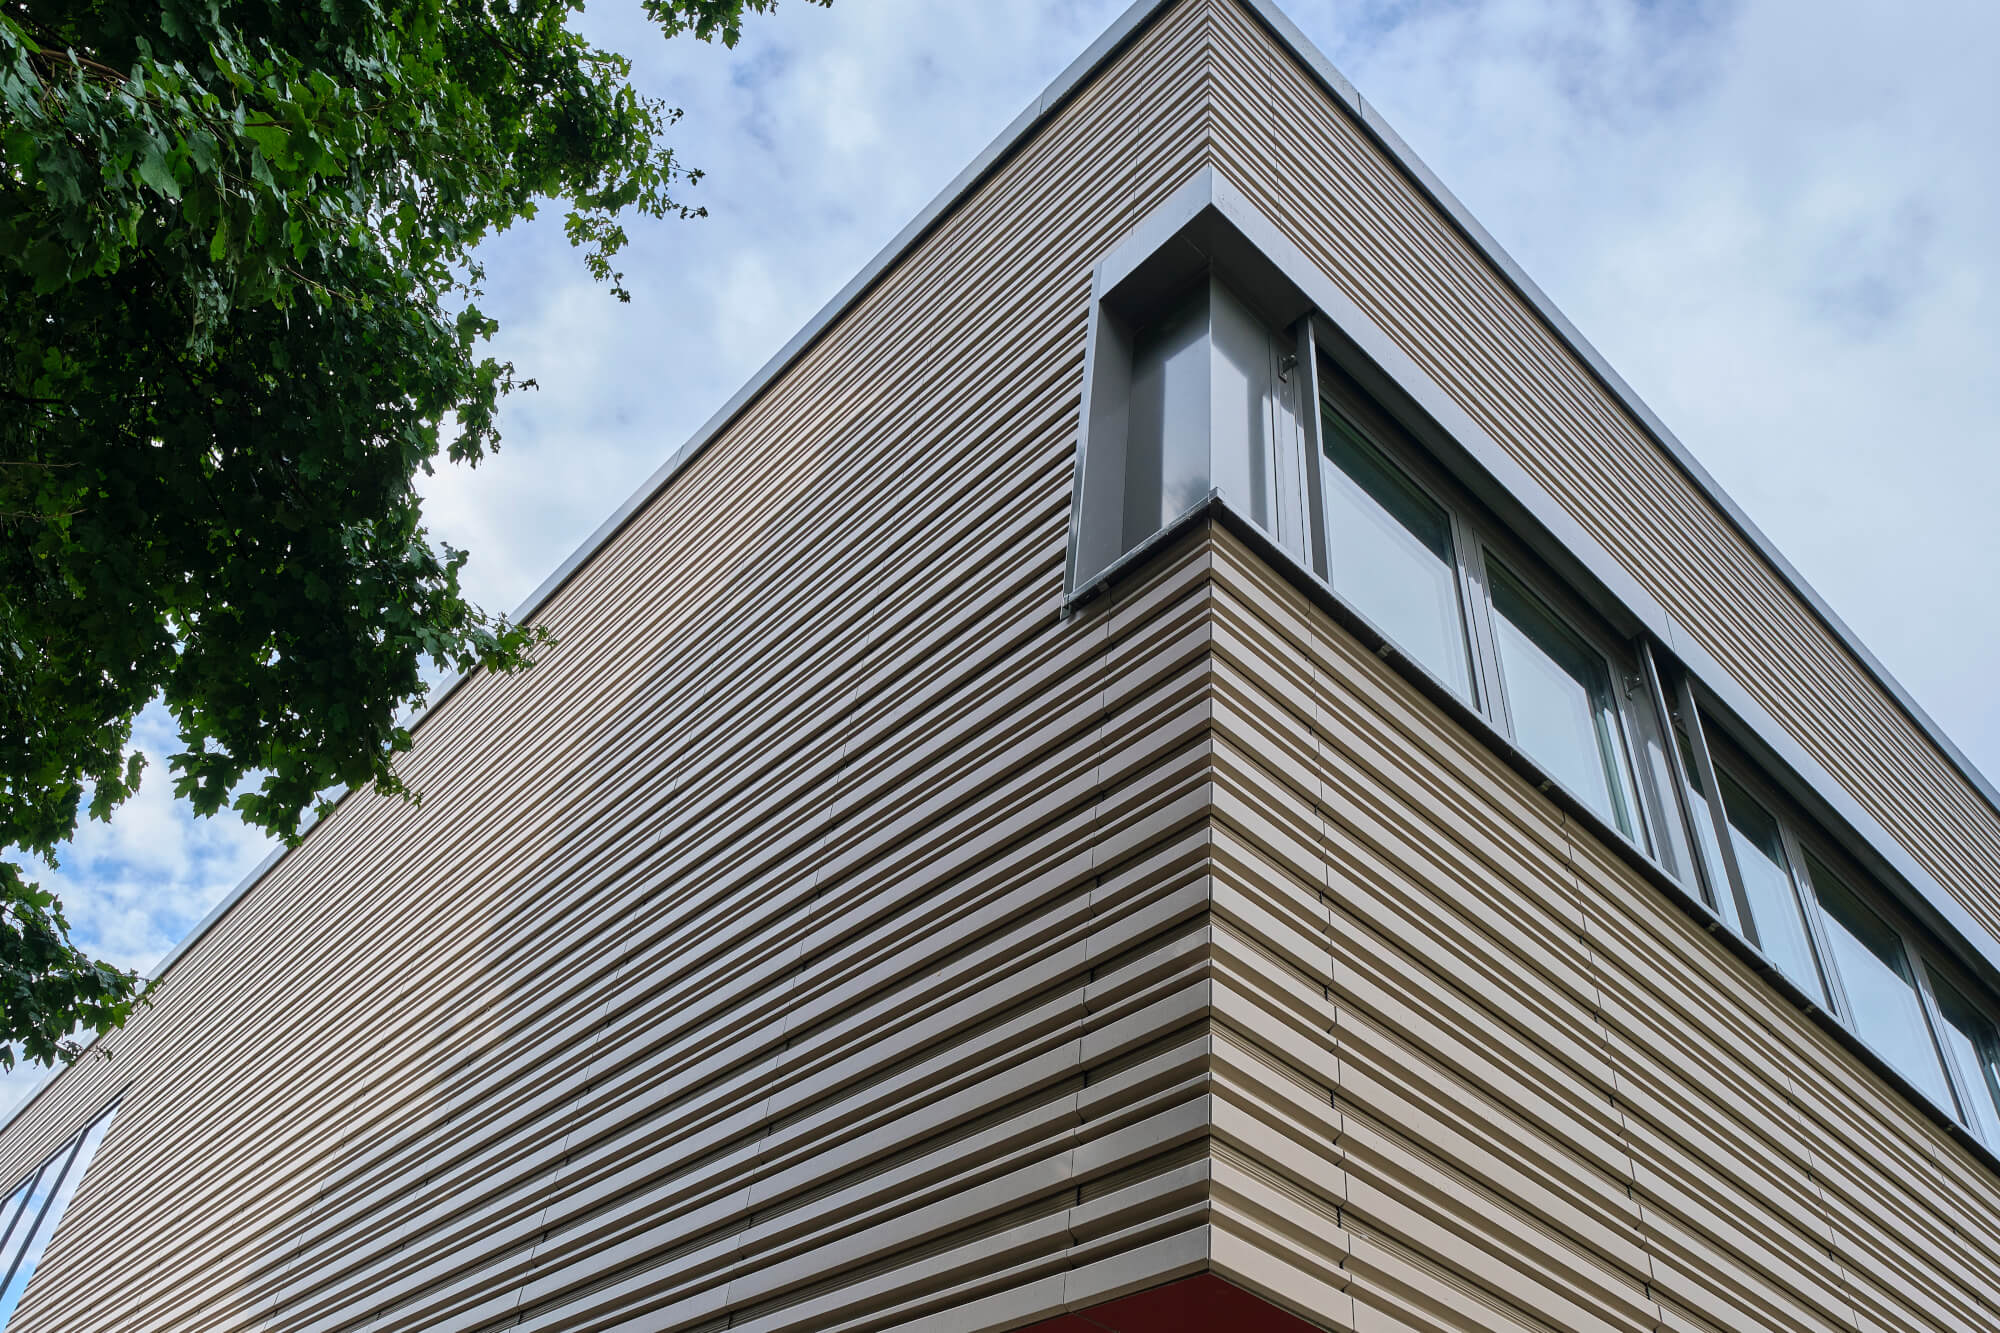 Tonality Referenz Gesamtschule Krefeld: Keramikfassade an Gebäudeecke mit abwechselnden Terrakotta-Tönen und lebendiger Strukturierung